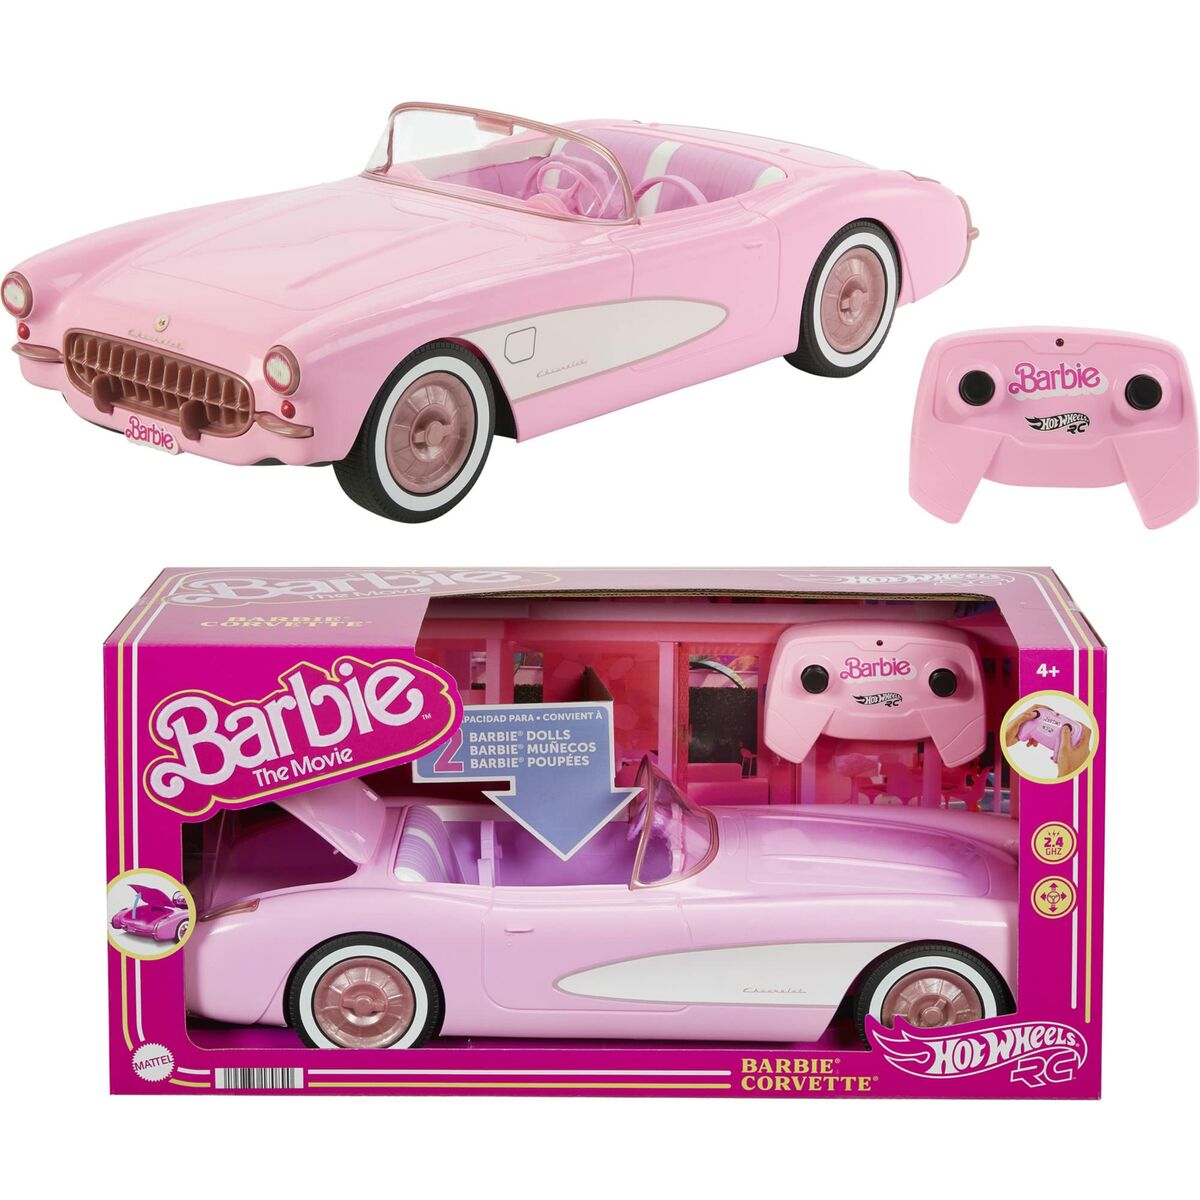 Vehicle Barbie The Movie Hot Wheels RC Corvette